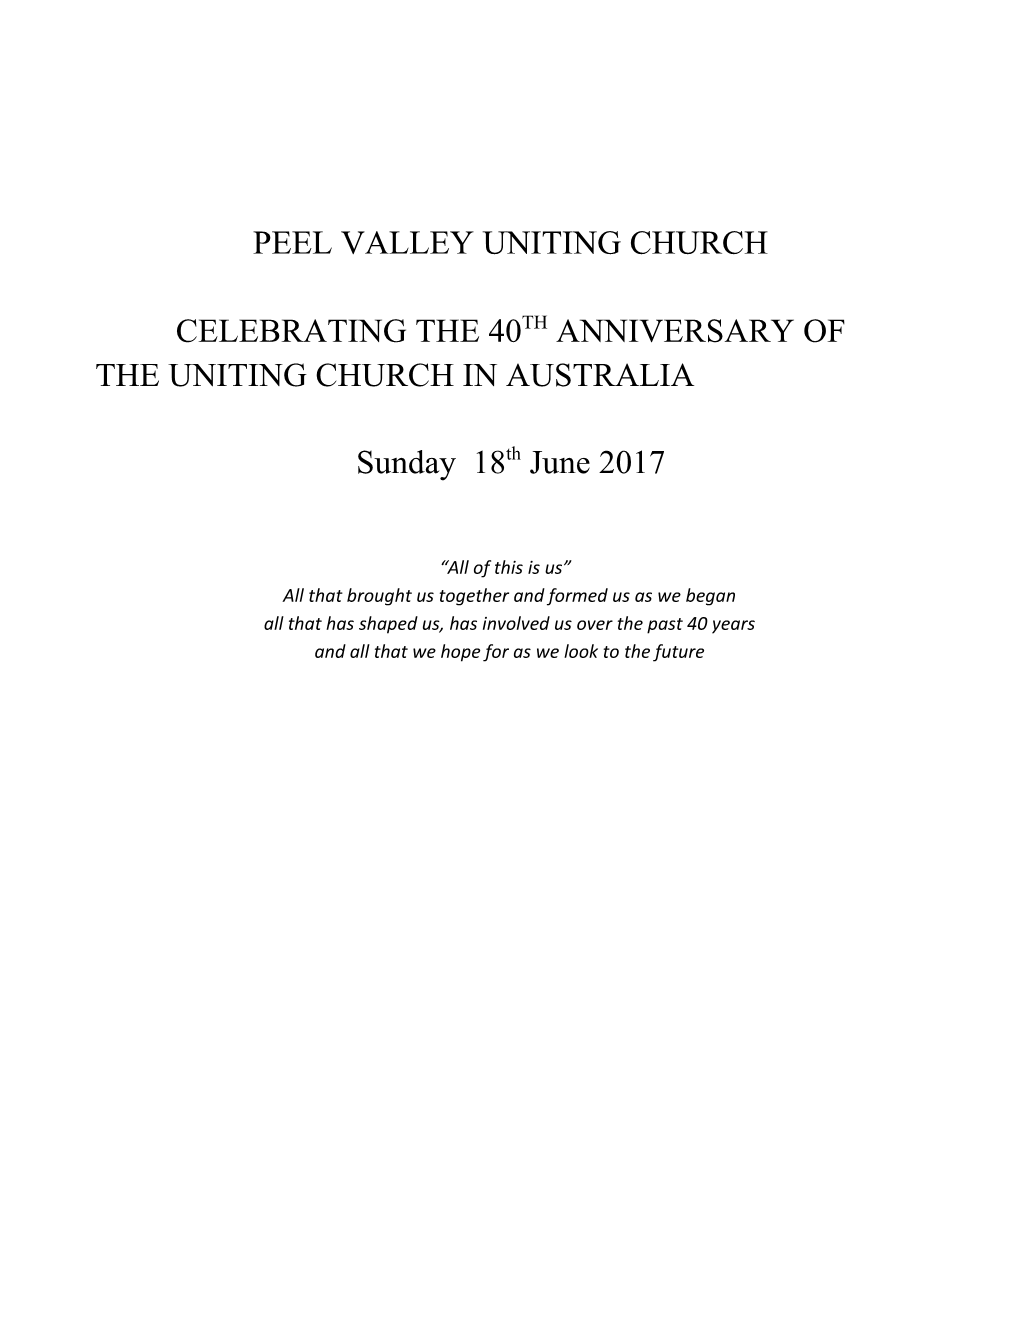 Peel Valley Uniting Church